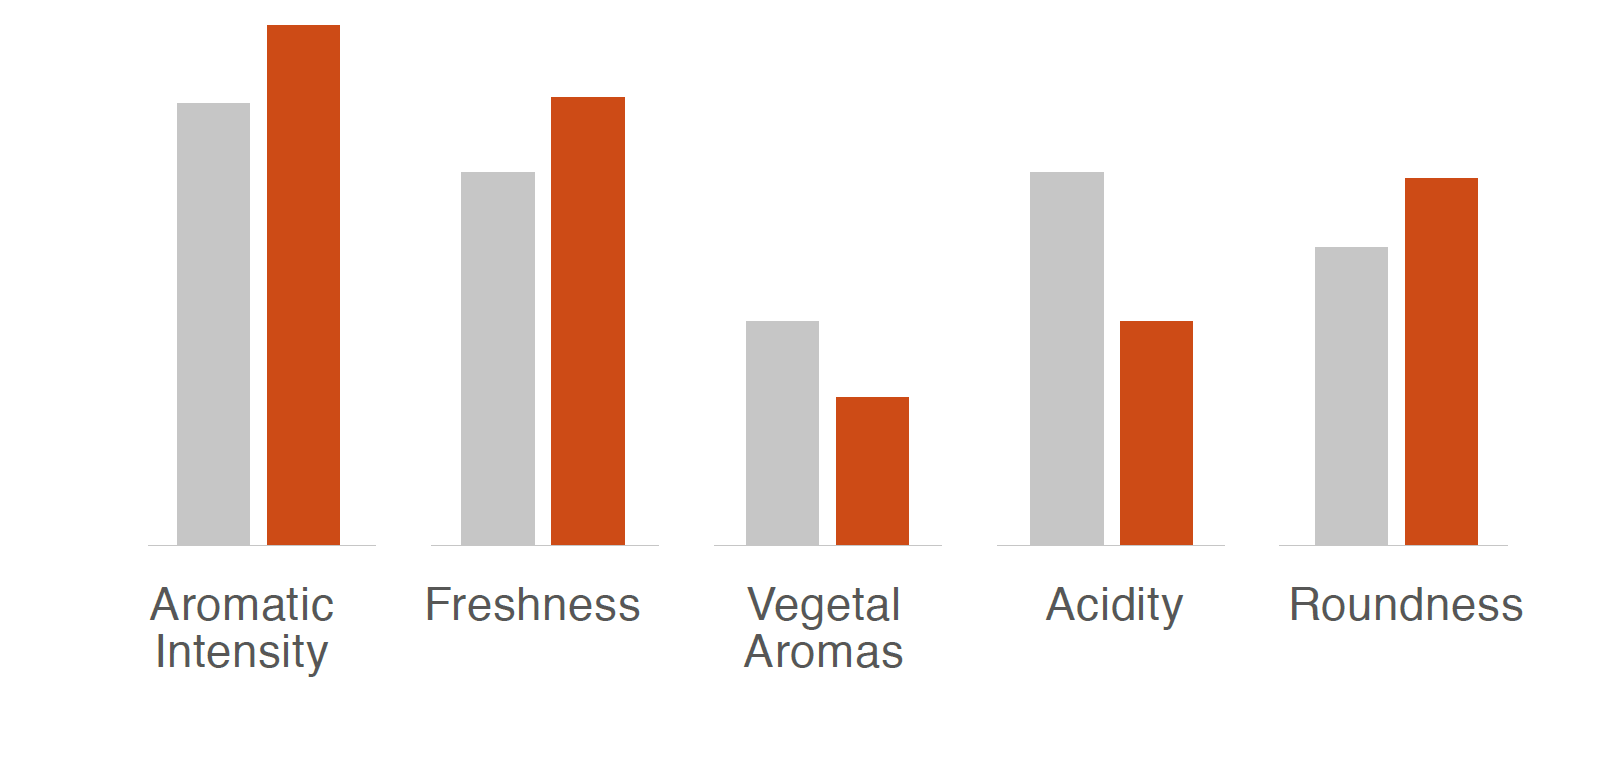 Positive impact of Cilyo on aromatic intensity, freshness, vegetation, acidity and roundness.